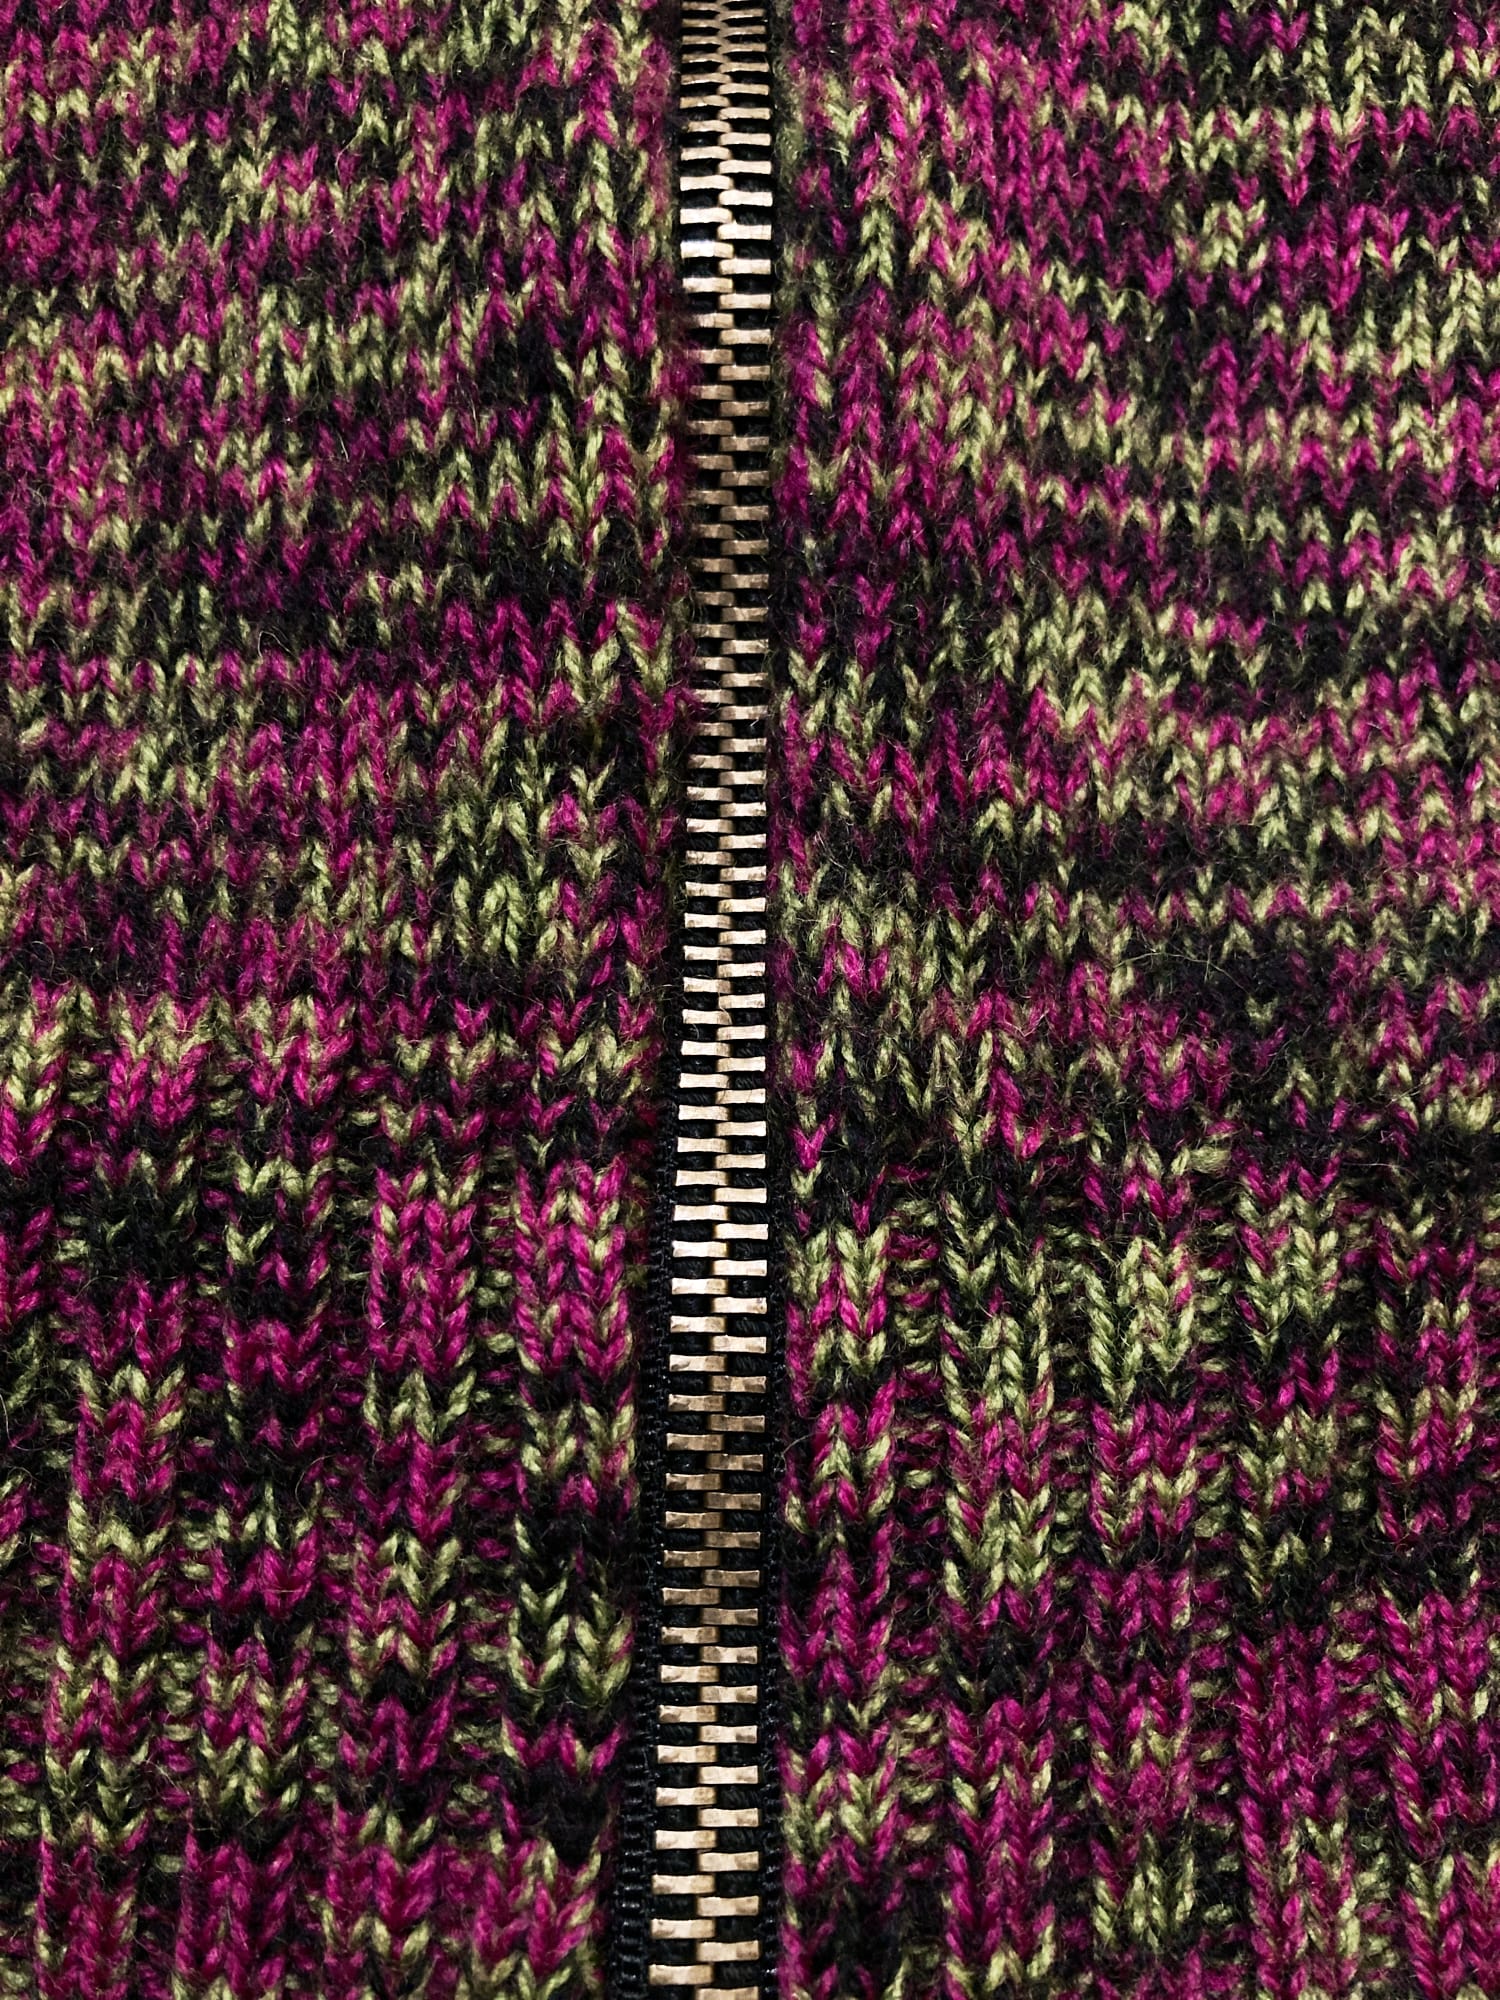 Dirk Bikkembergs winter 1996 purple wool marle short sleeve knit zip jacket S